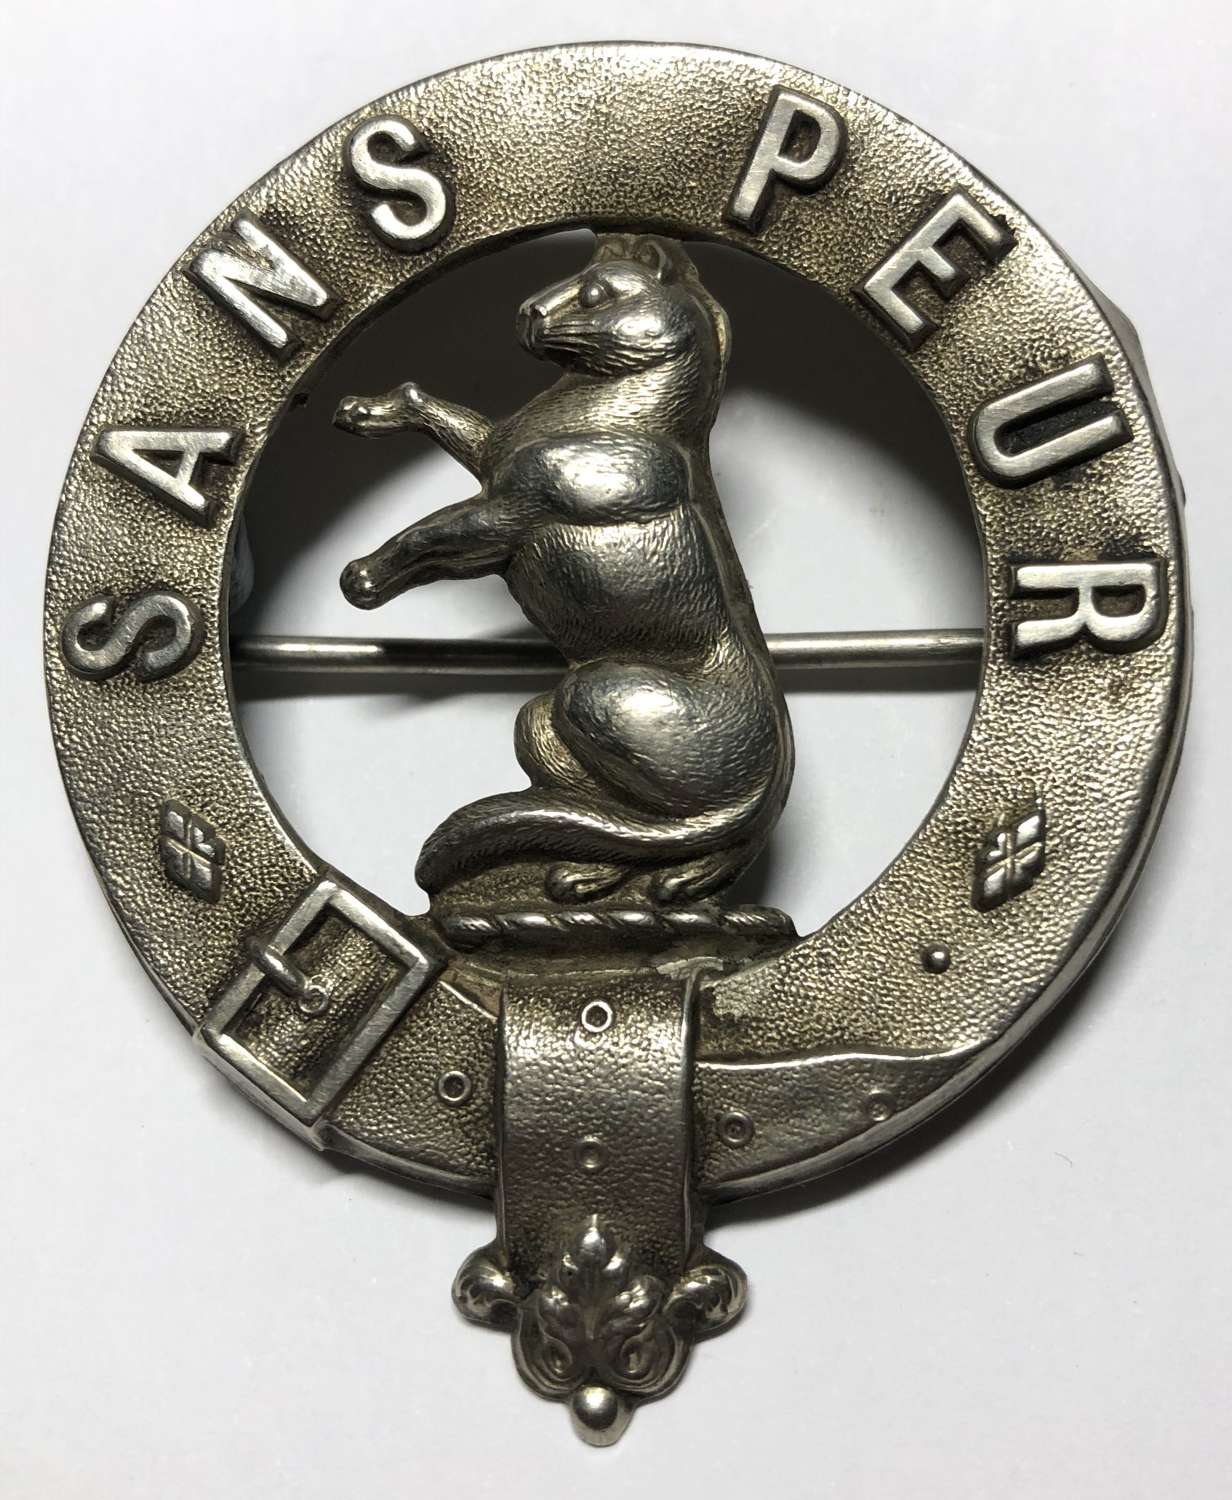 Scottish. 5th Bn. Seaforth Highlanders glengarry badge circa 1908-20